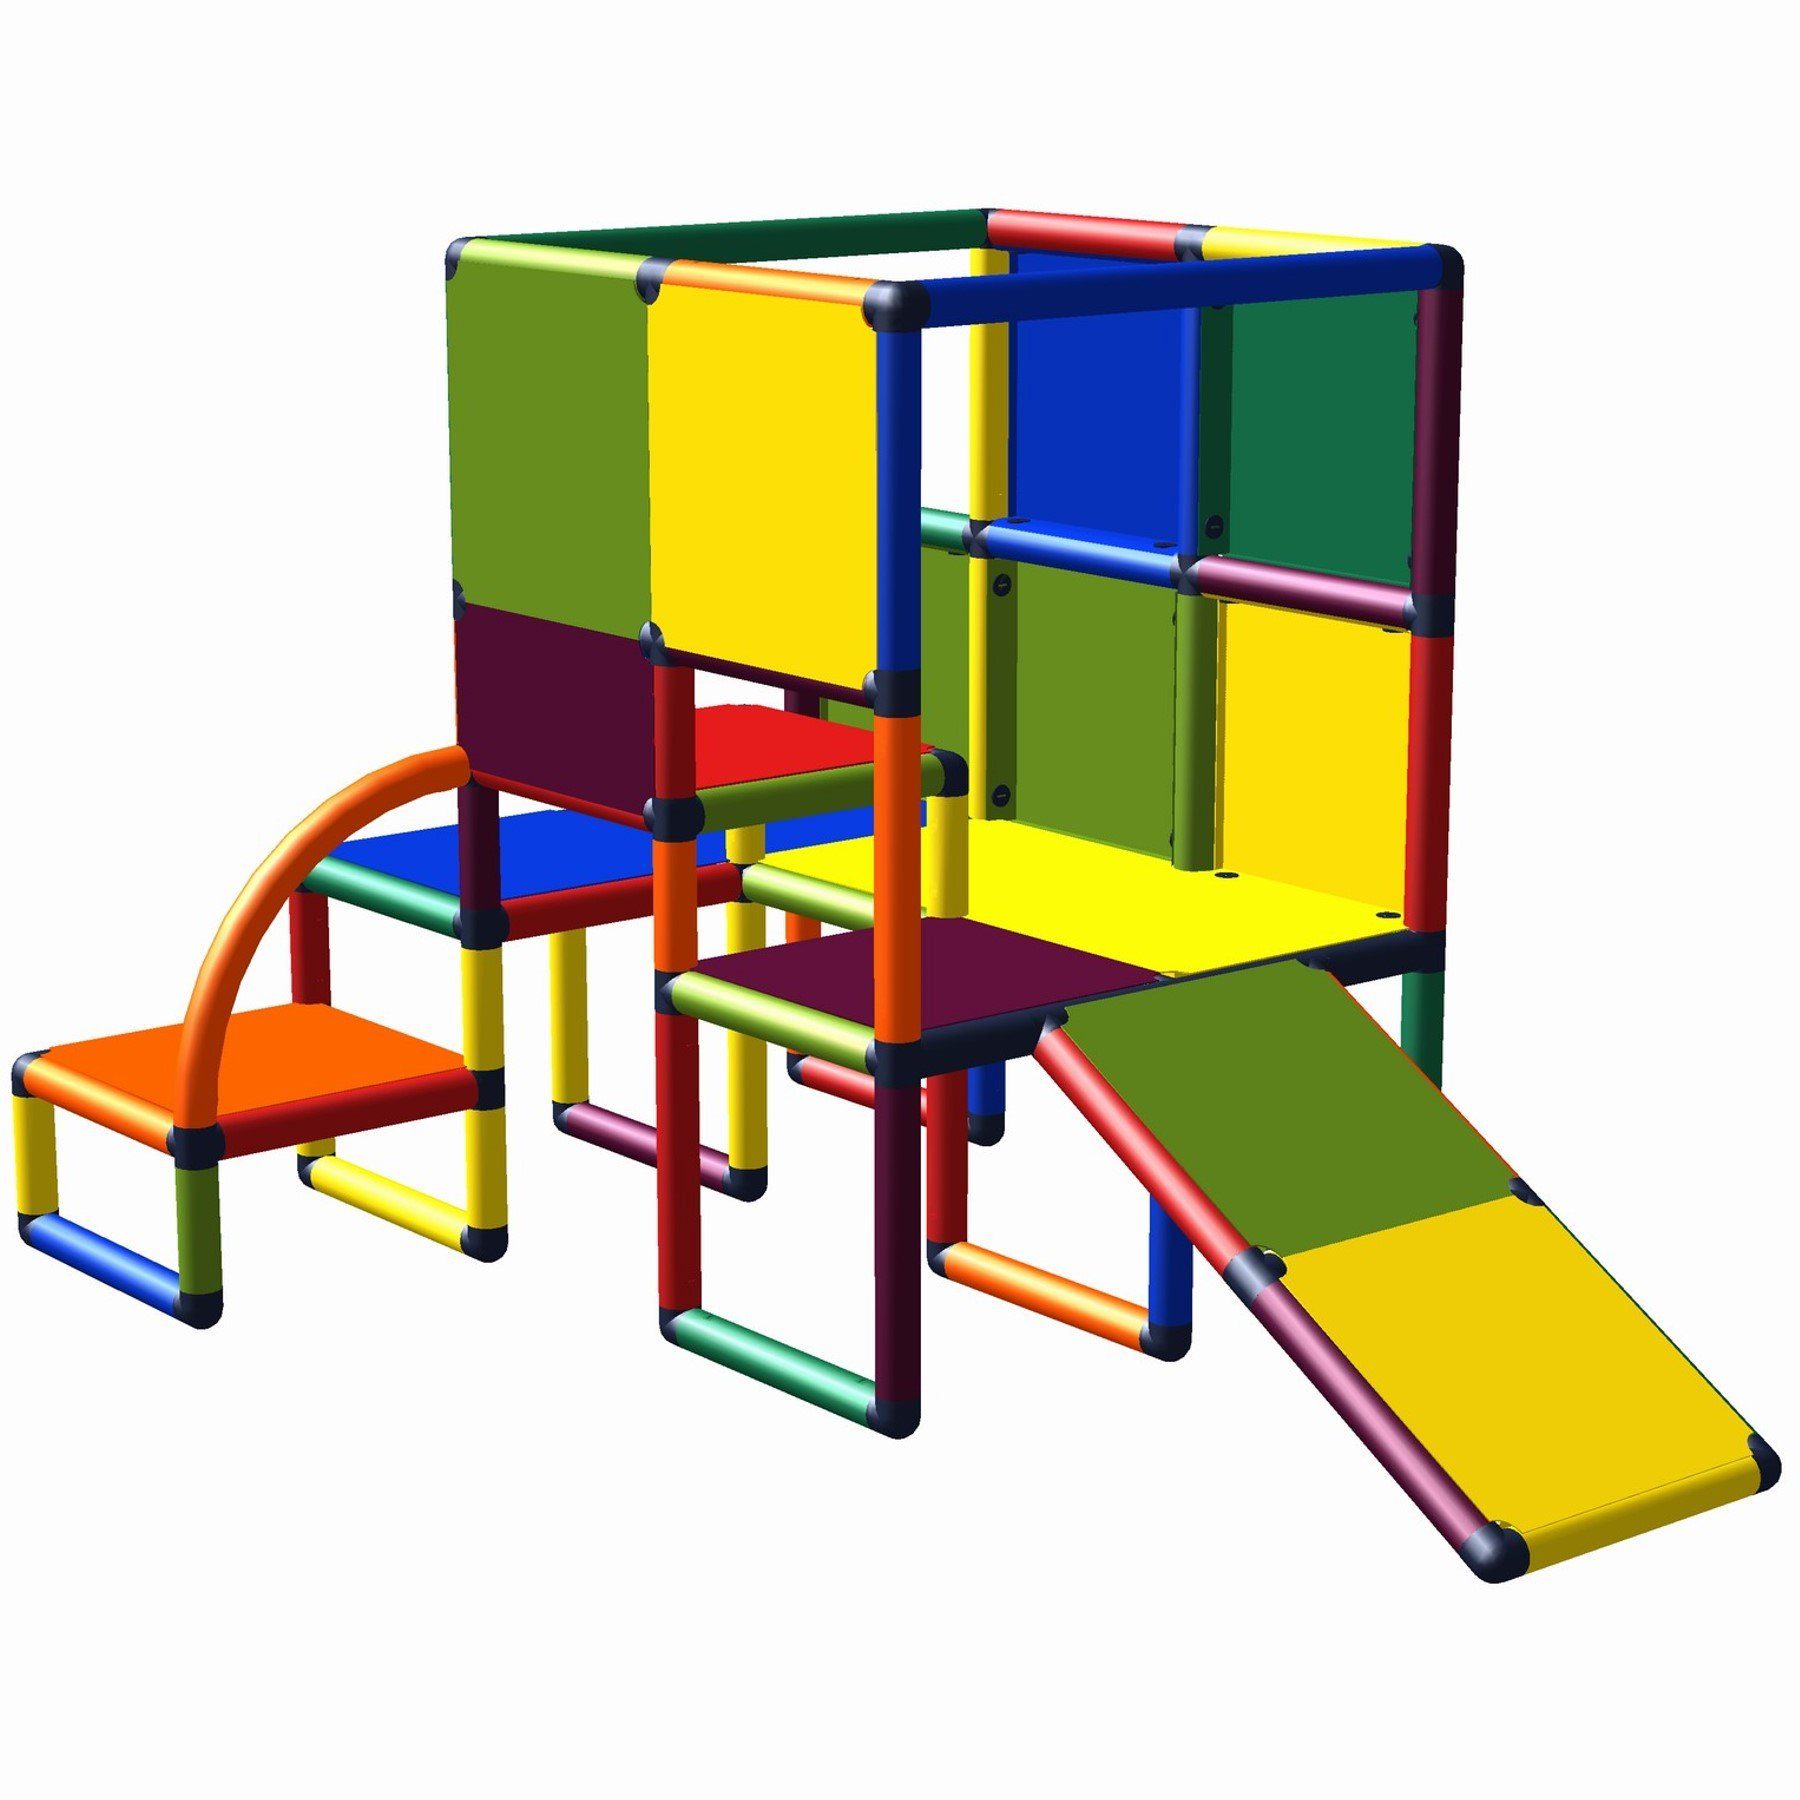 move and stic Konstruktions-Spielset Spielhaus MARCEL Kinder Rutsche  Klettergerüst Garten Kinderzimmer, (komplettes umbaubares Spielset),  erweiterbar, aus recyclebarem Kunststoff, Indoor & Outdoor